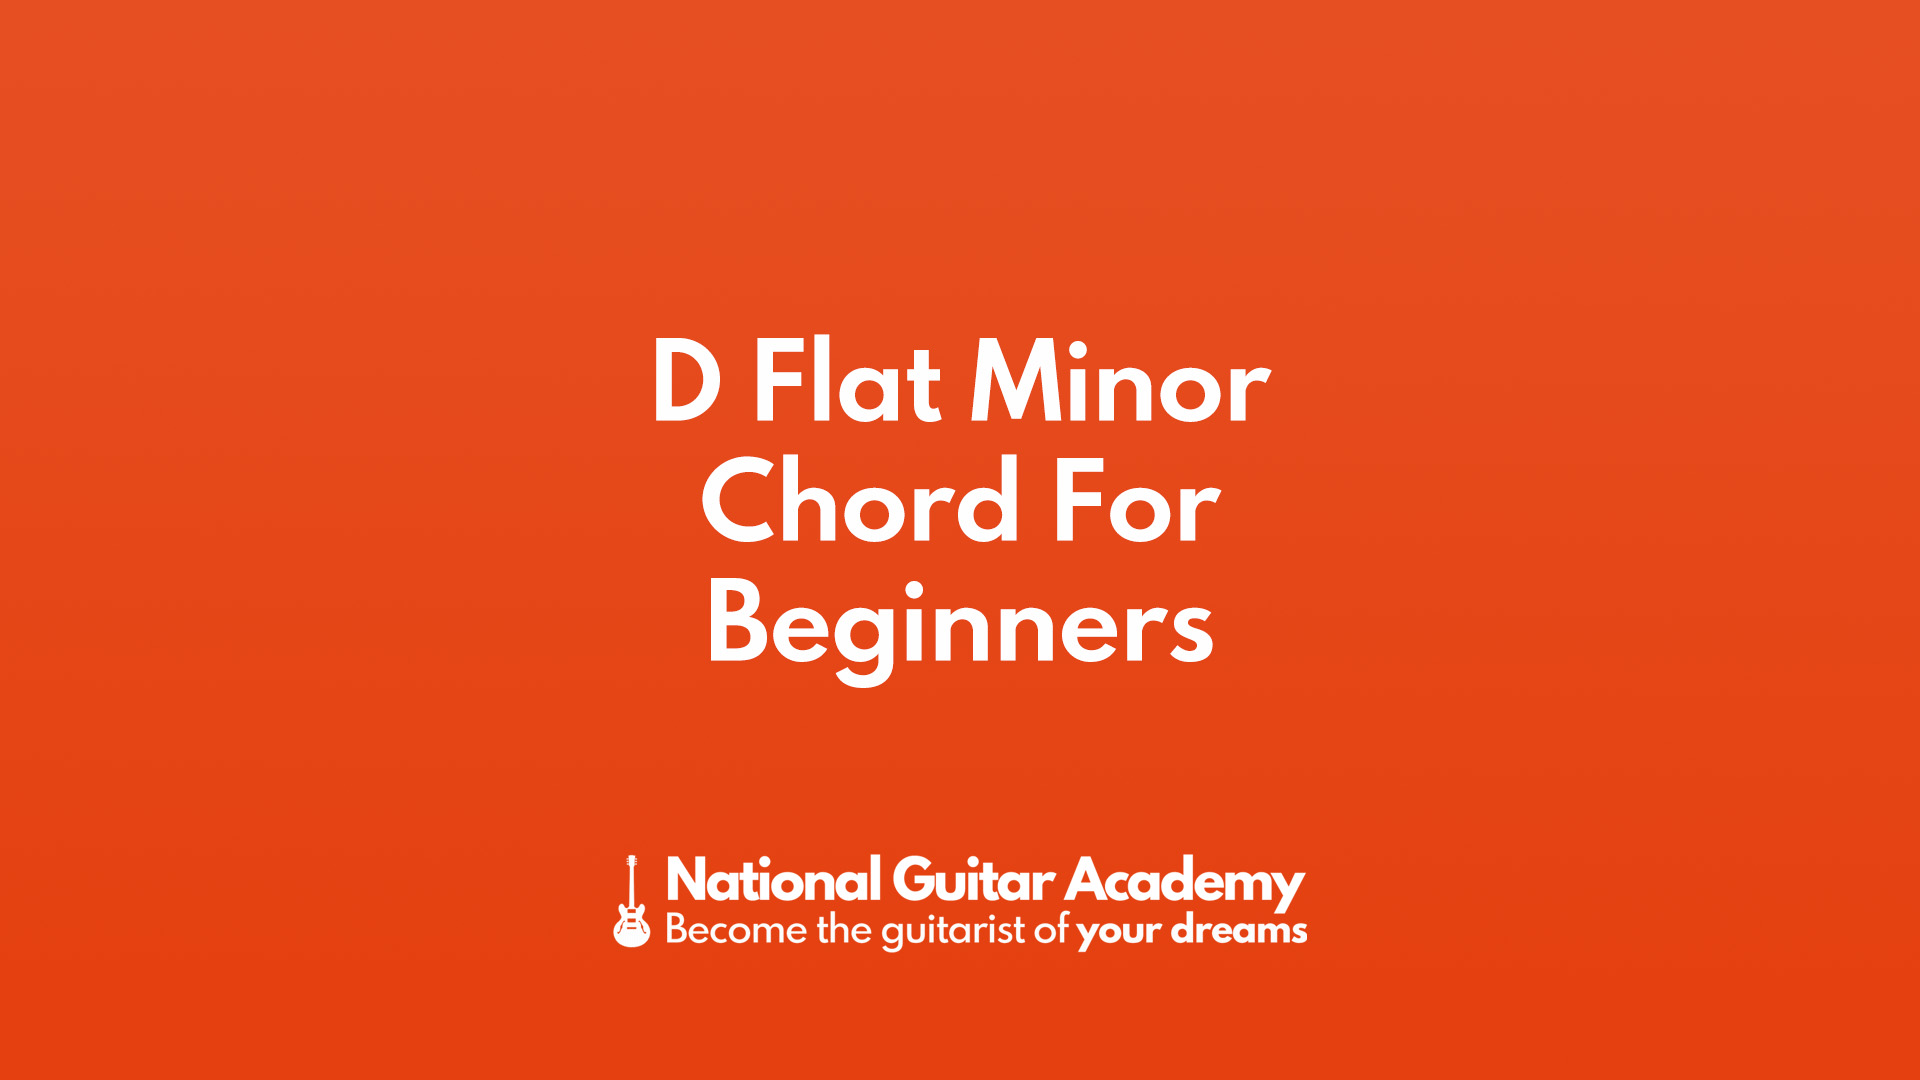 b flat minor chord